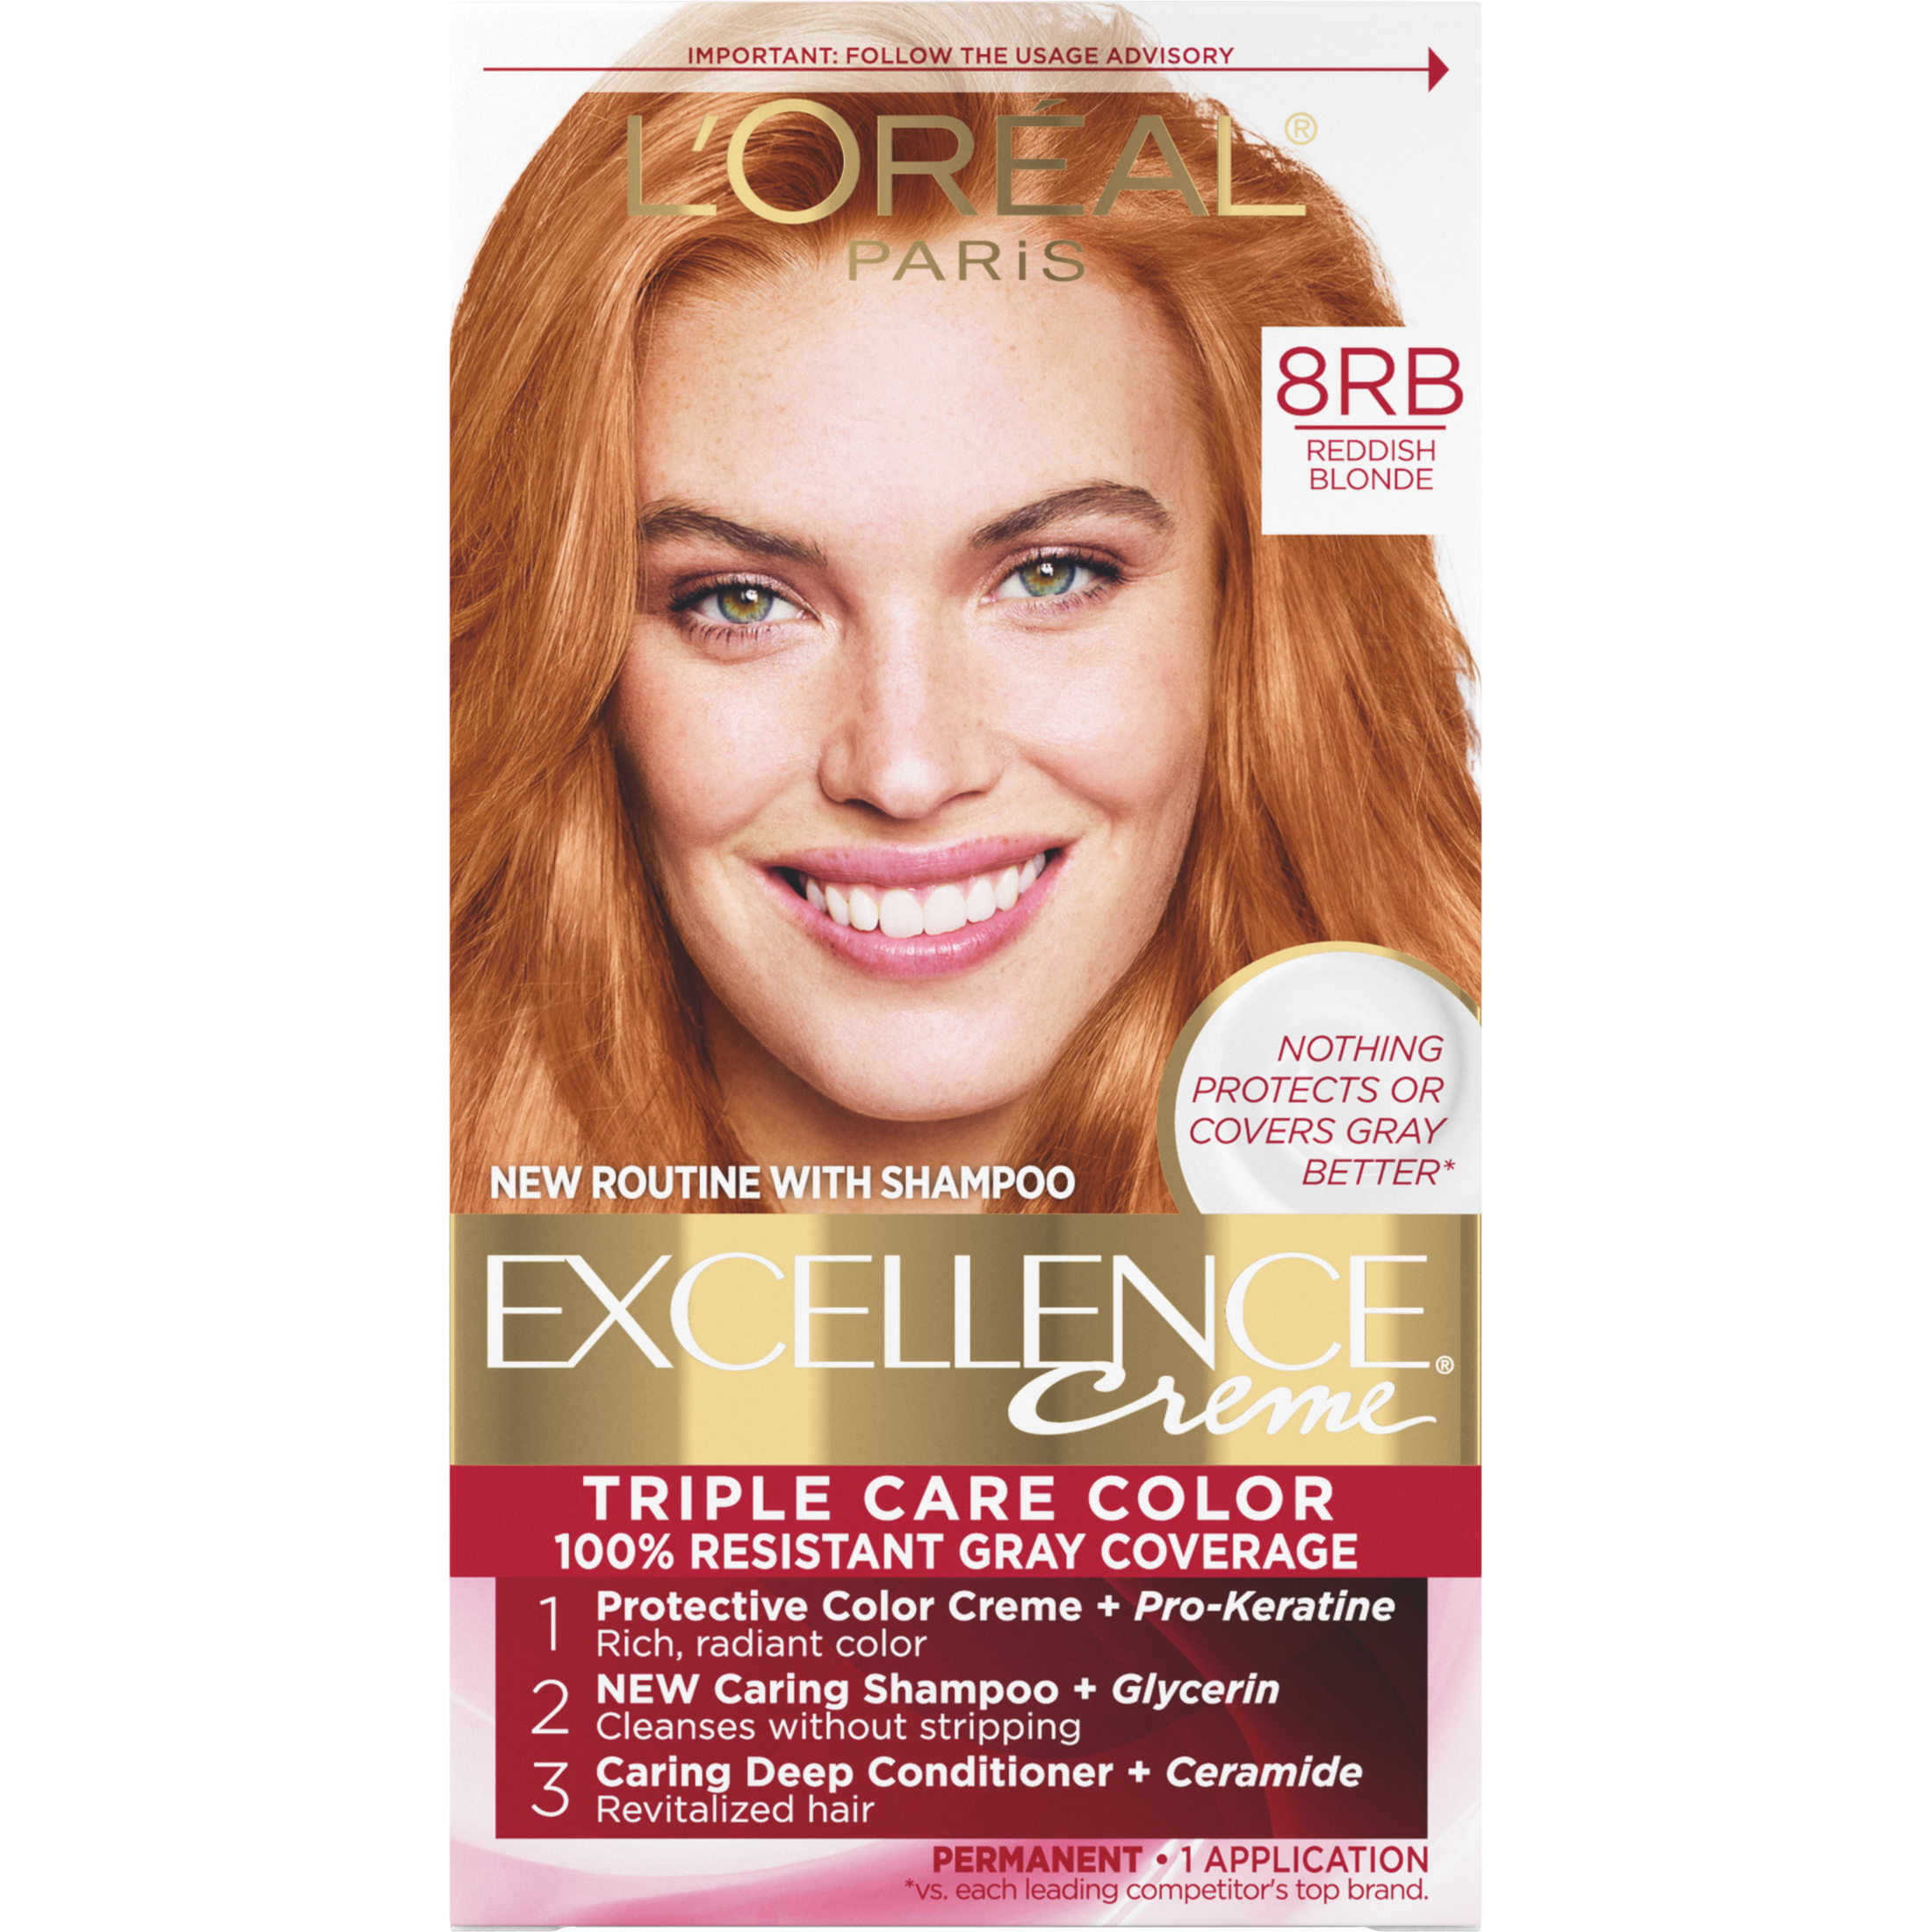 L'Oreal Paris Excellence Creme Permanent Hair Color, 8RB Medium Reddish Blonde - image 1 of 8